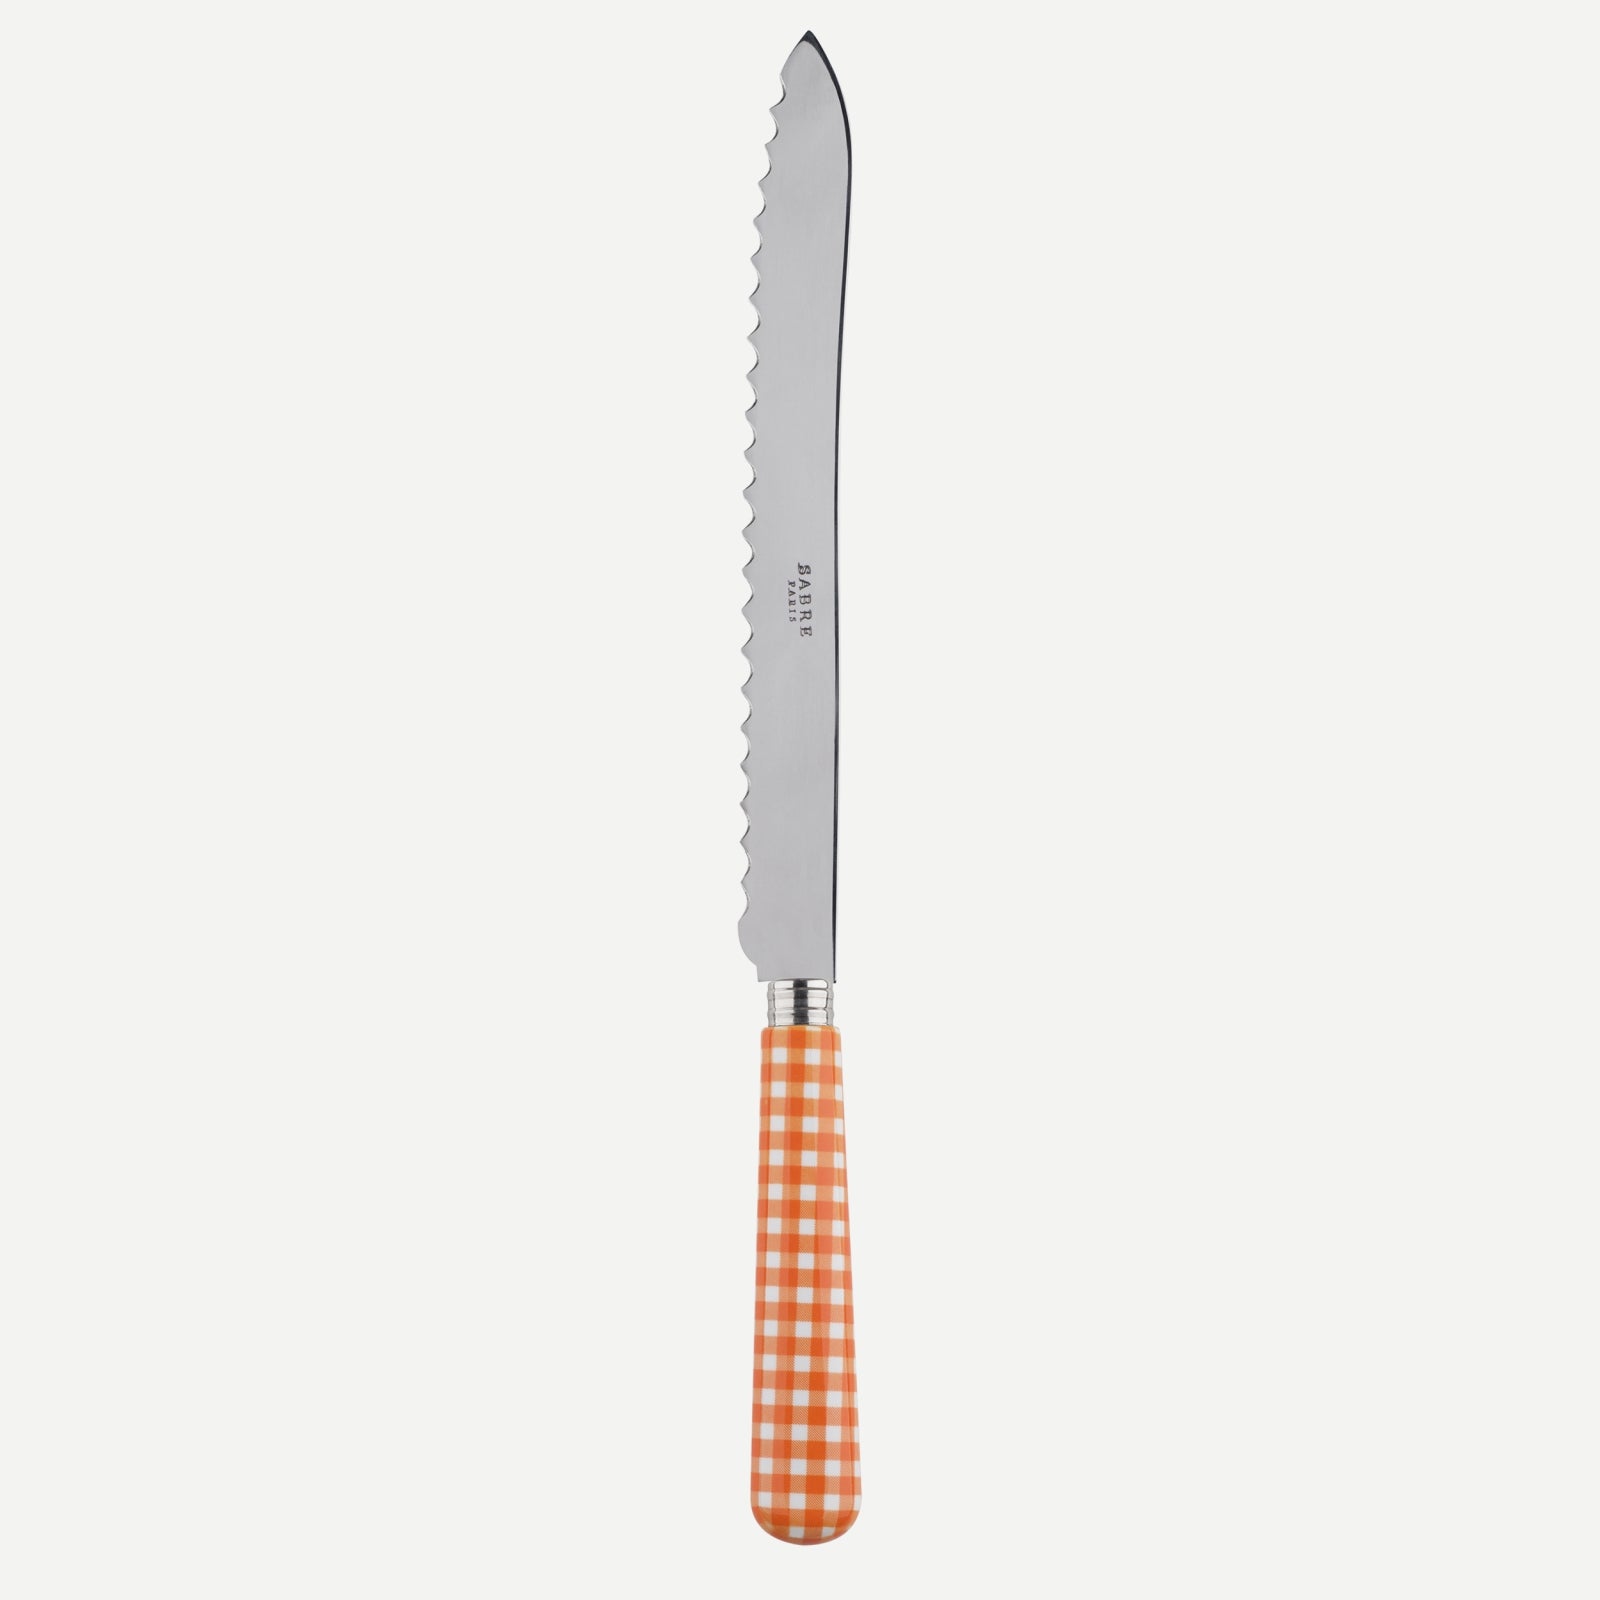 Bread knife - Gingham - Orange